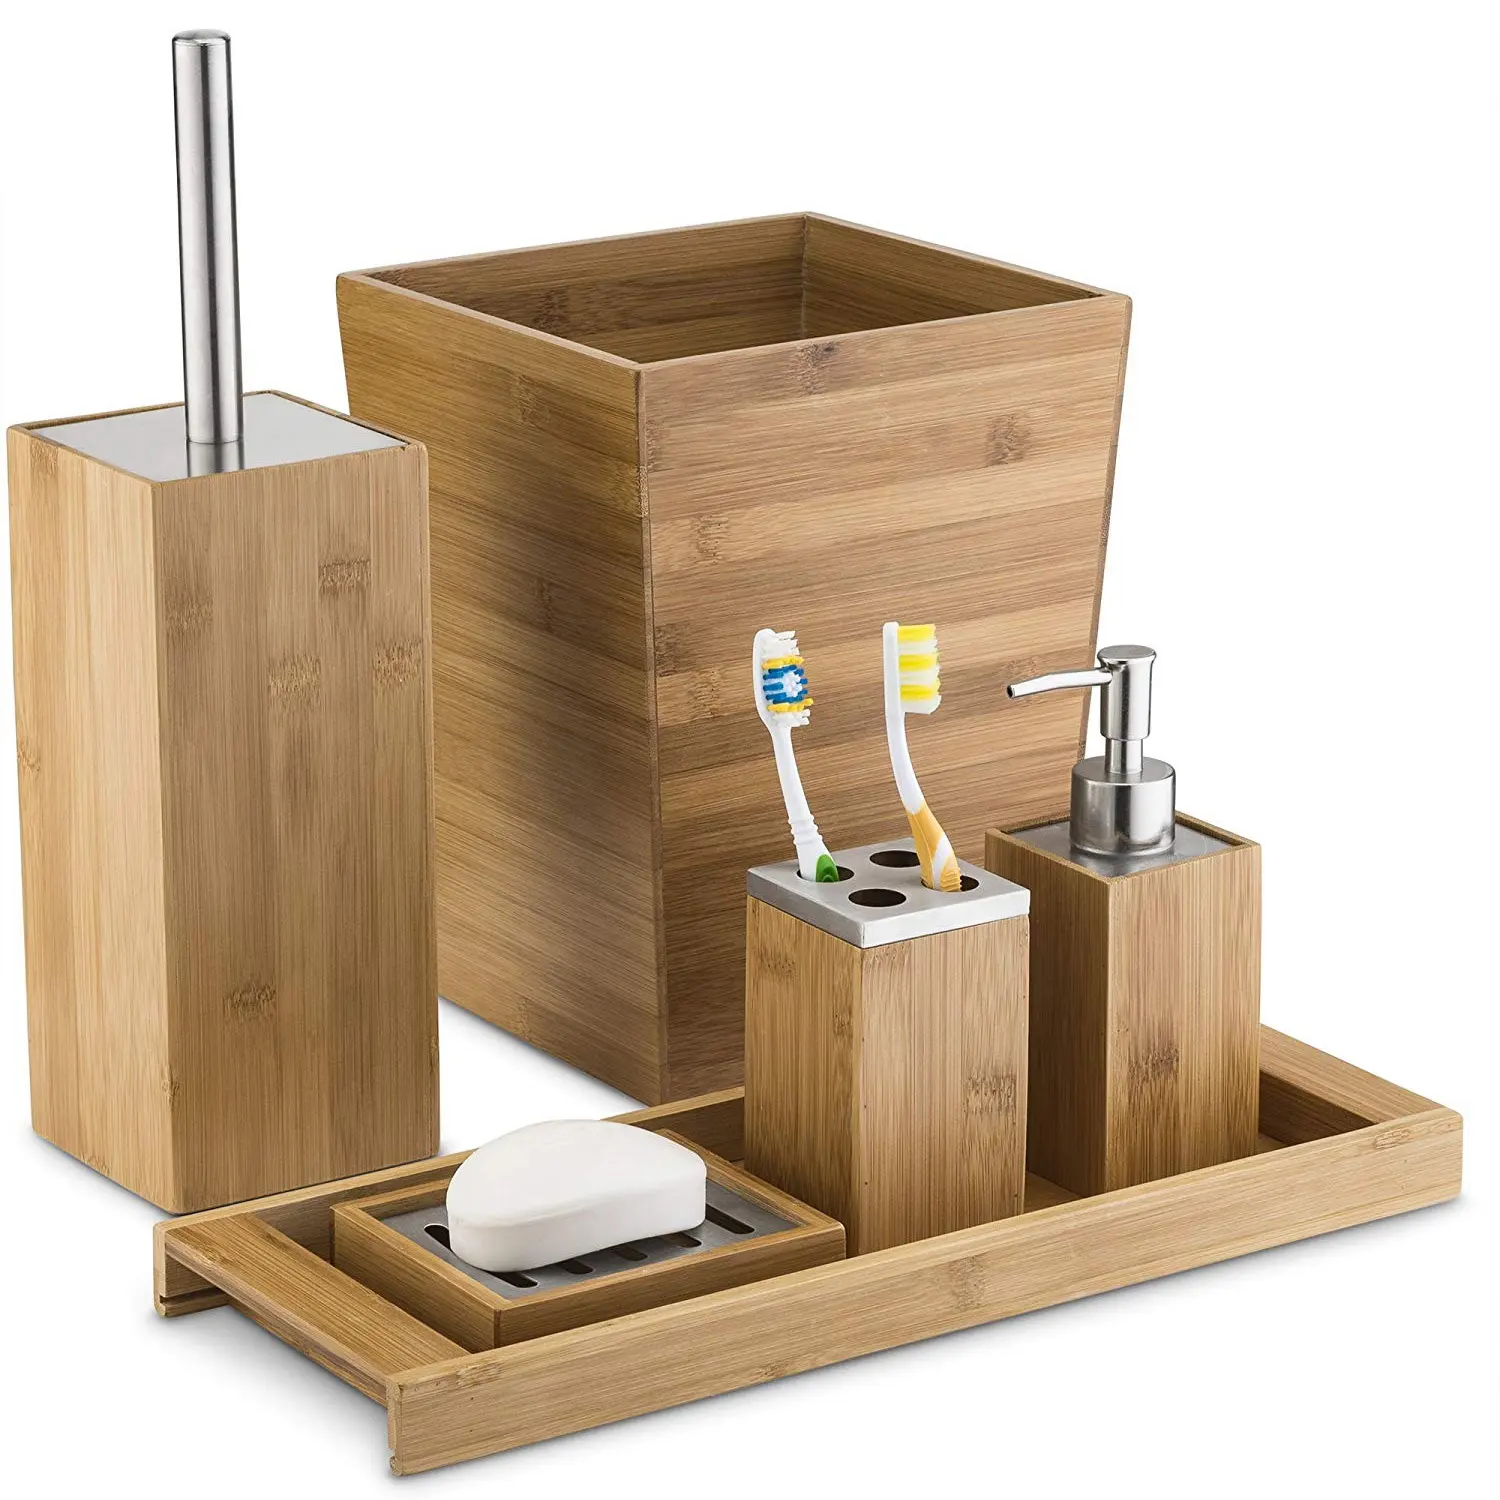 Eco-friendly wholesale bamboo household decor set 6 piece bathroom accessories set